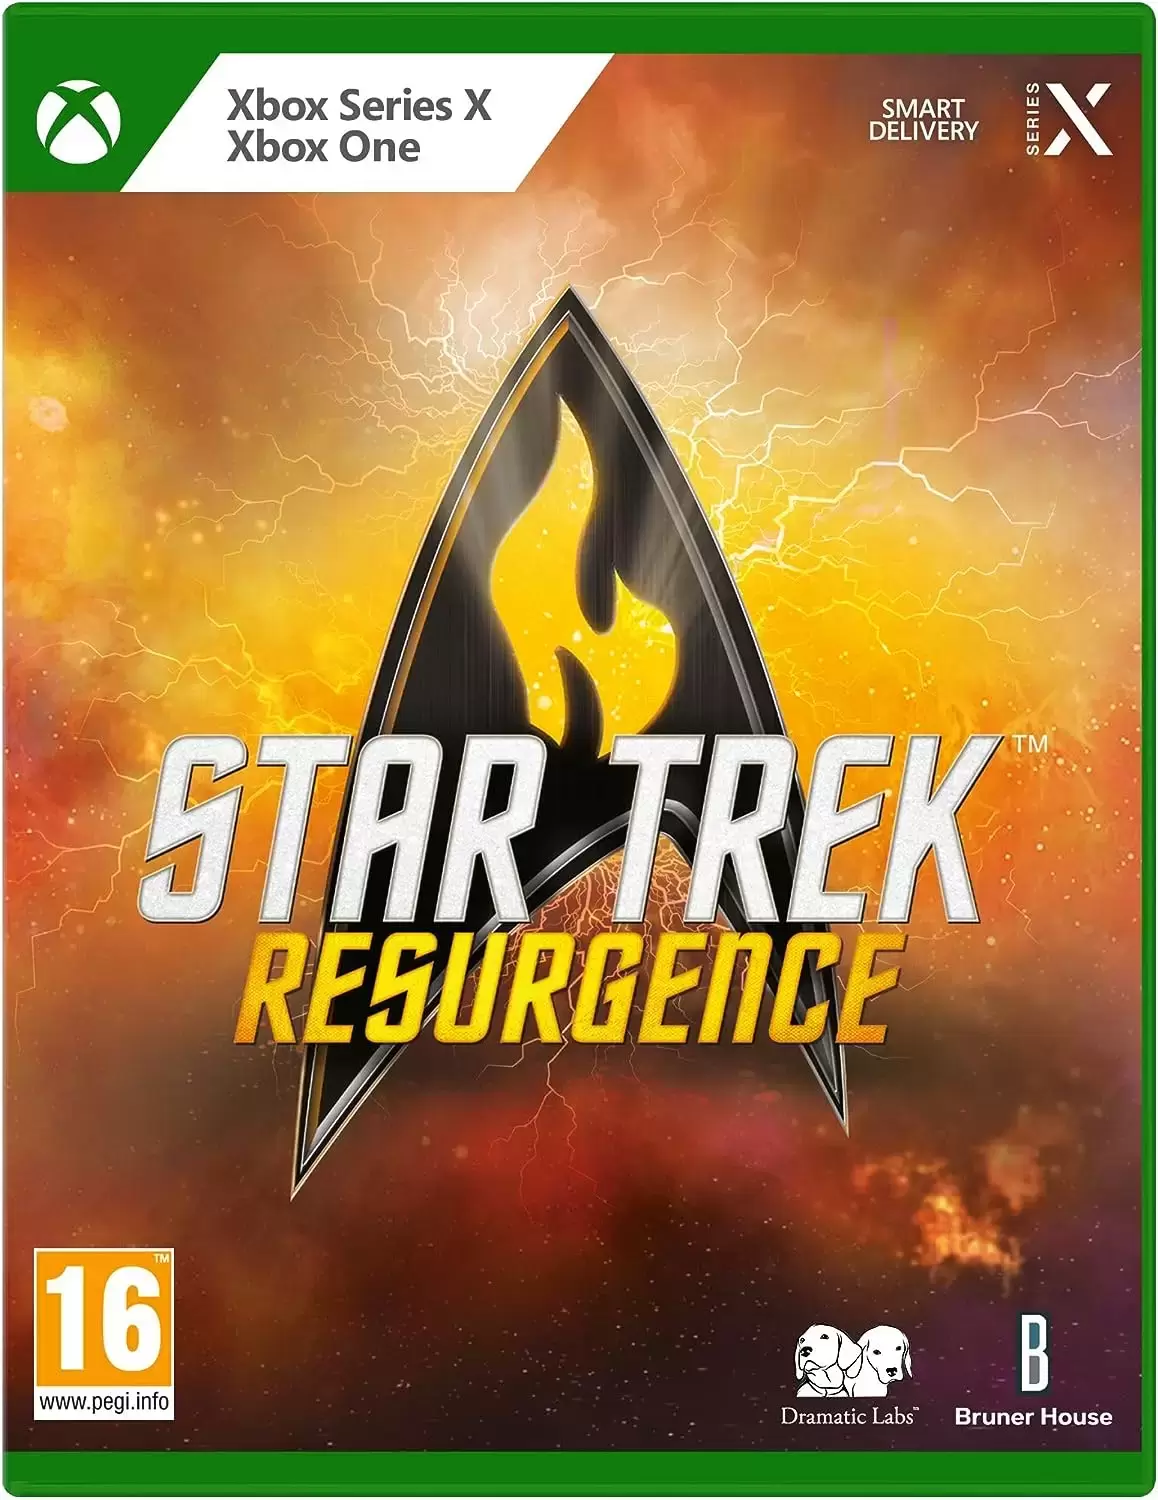 XBOX One Games - Star Trek Resurgence